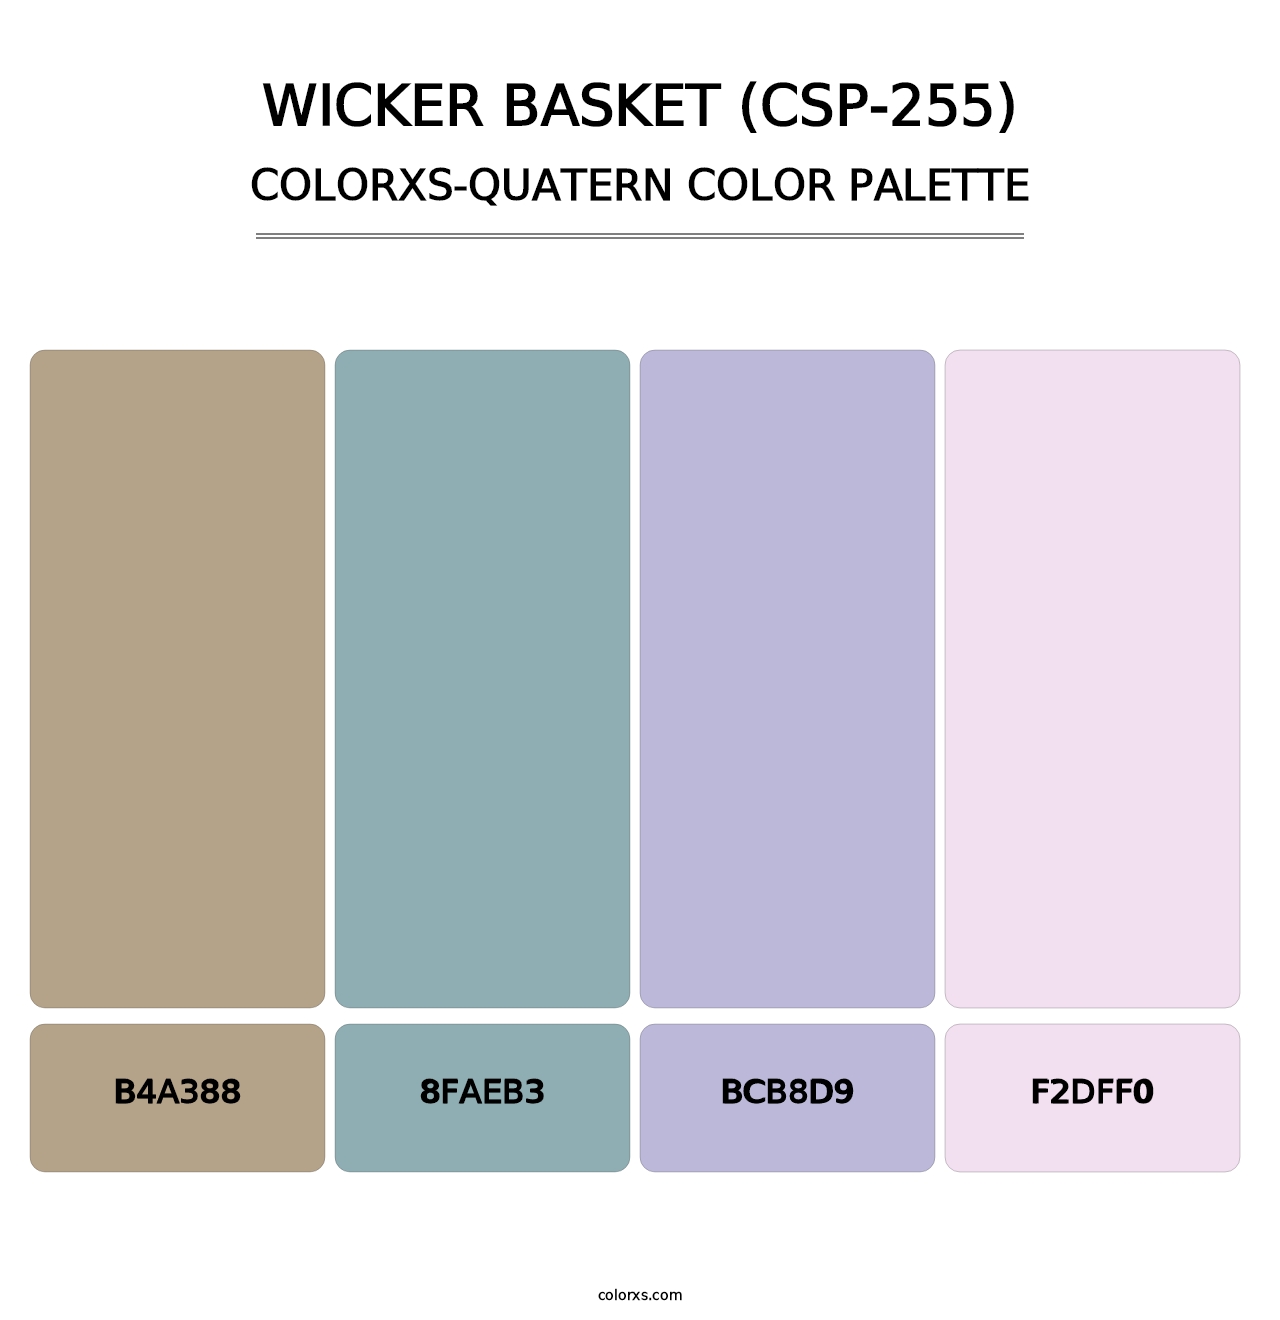 Wicker Basket (CSP-255) - Colorxs Quatern Palette